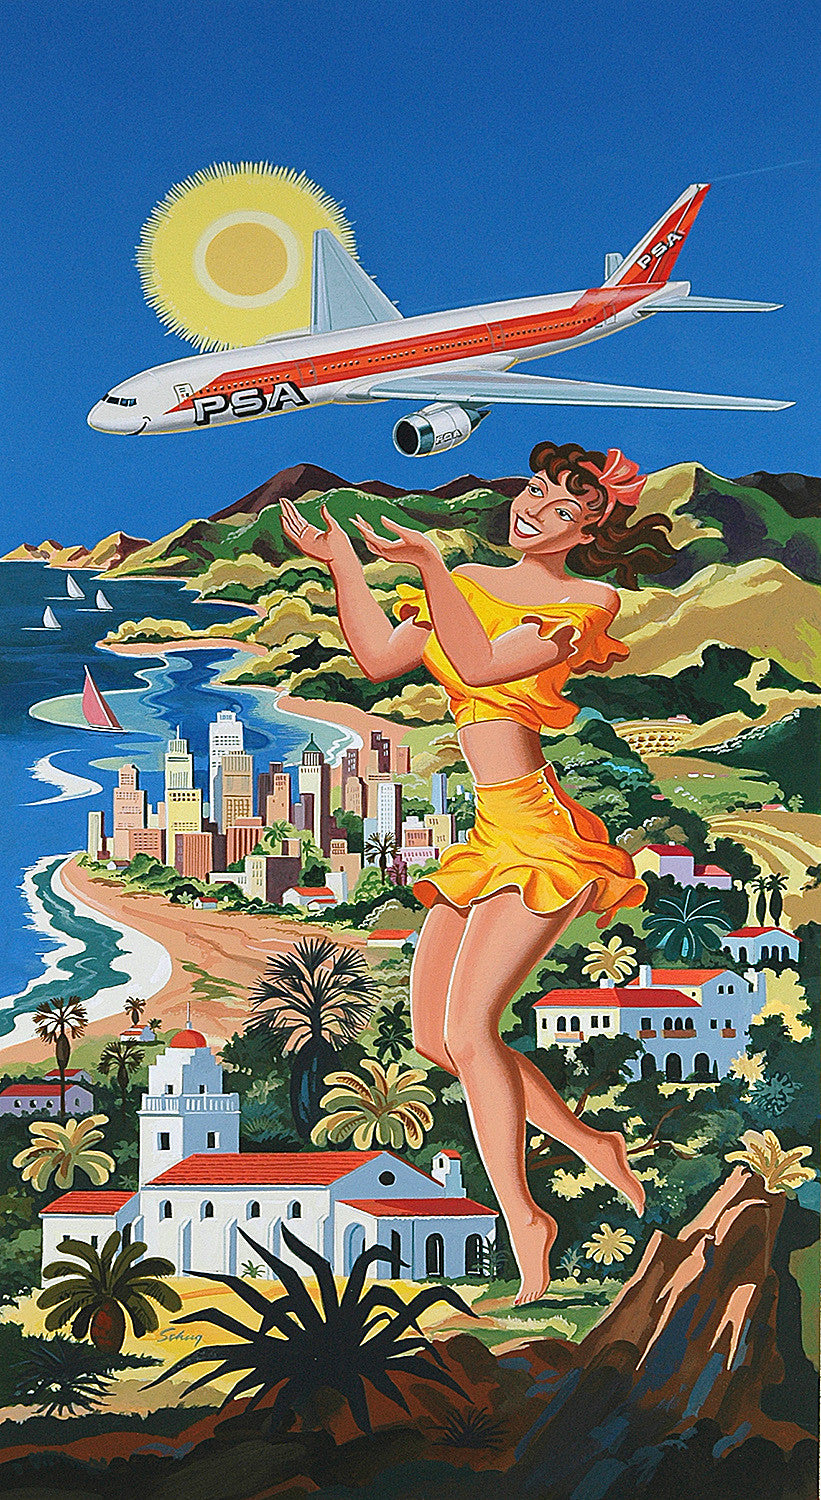 PSA 777 Fantasy Travel Poster